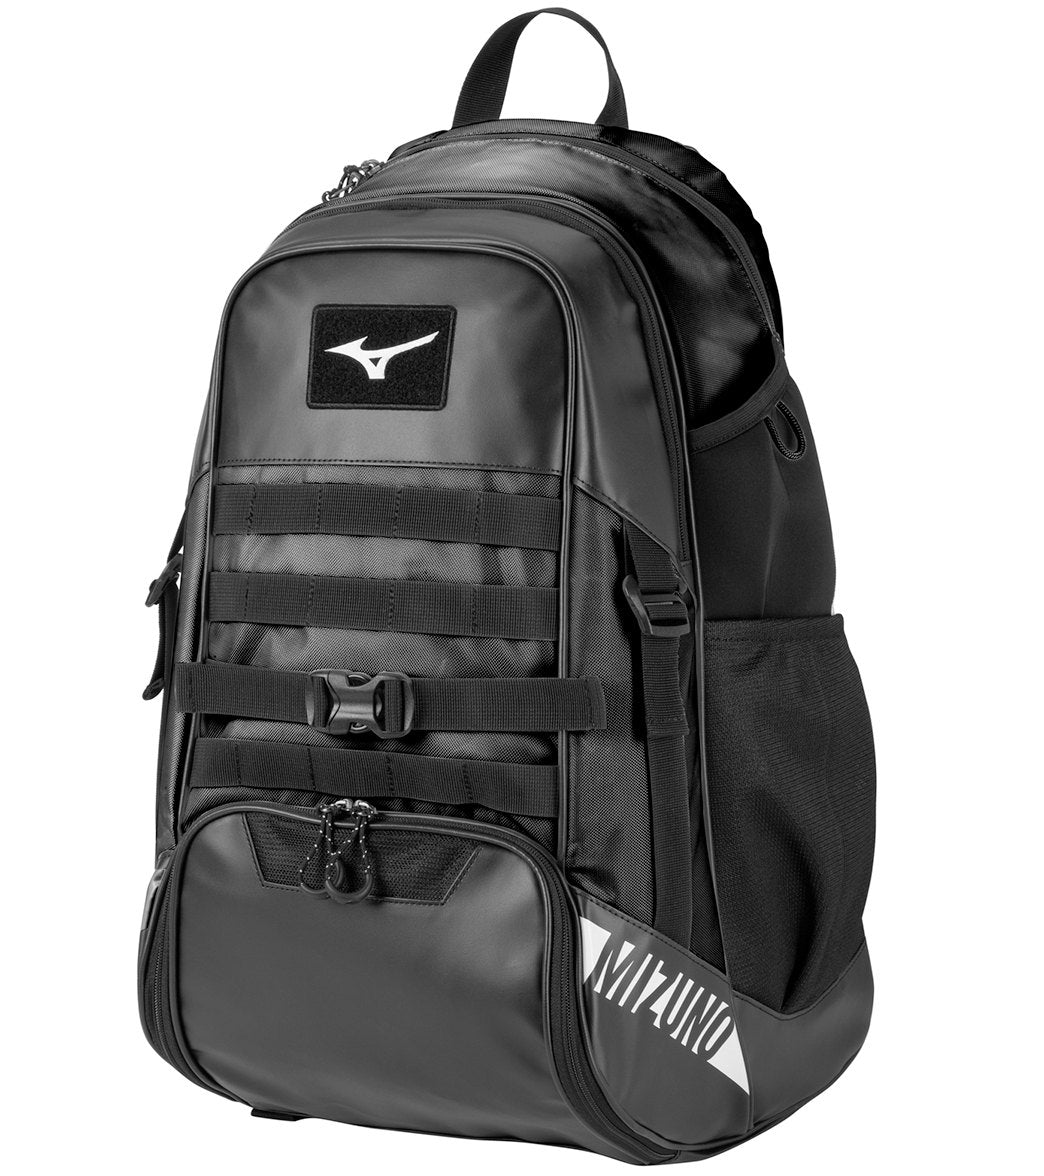 Mizuno Mvp X Backpack - Black - Swimoutlet.com